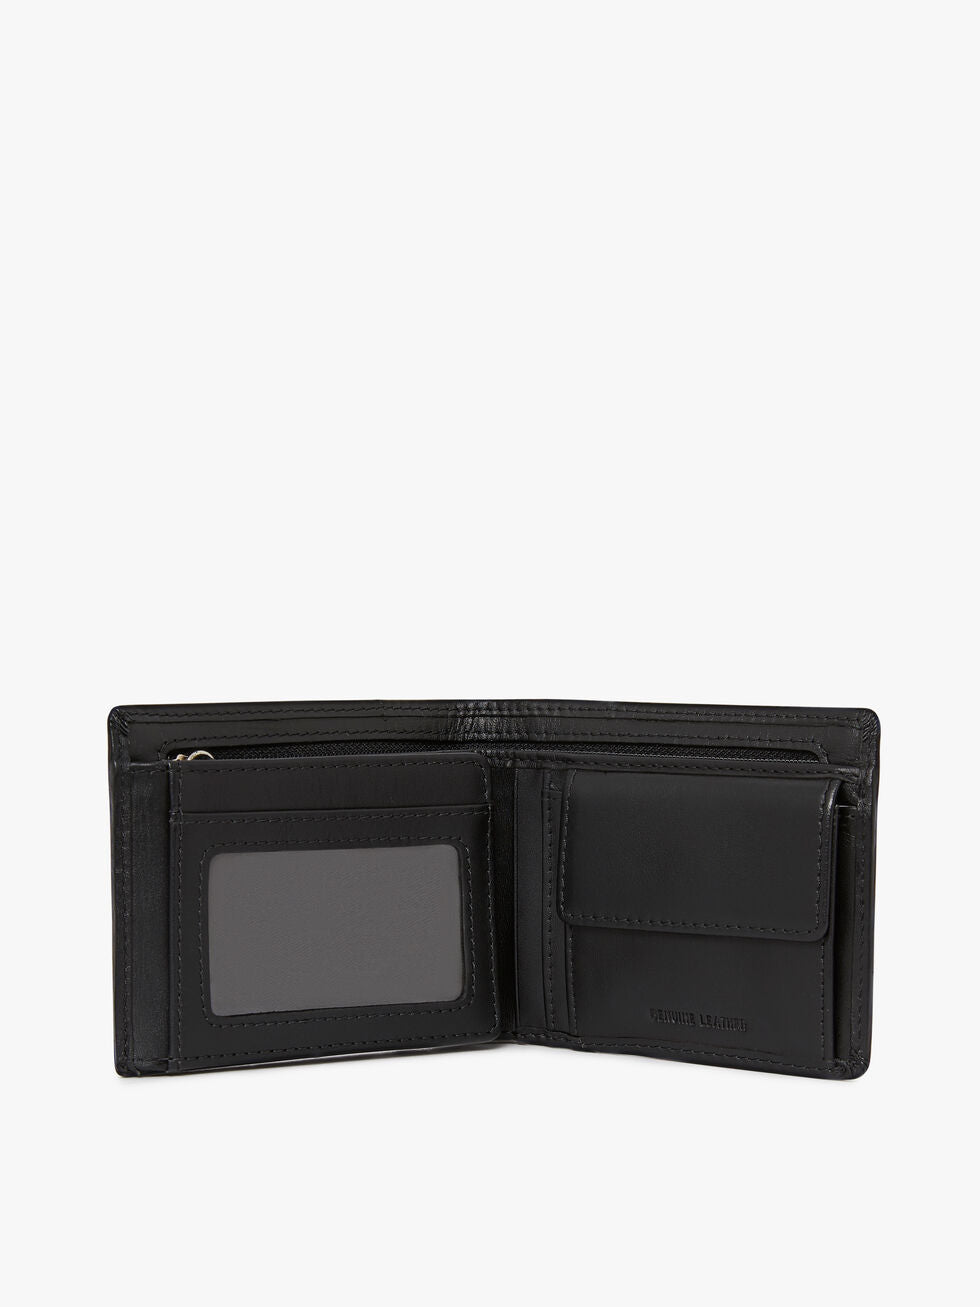 RMW CG254 Wallet - Thomson's Suits Ltd - Black - - 8097